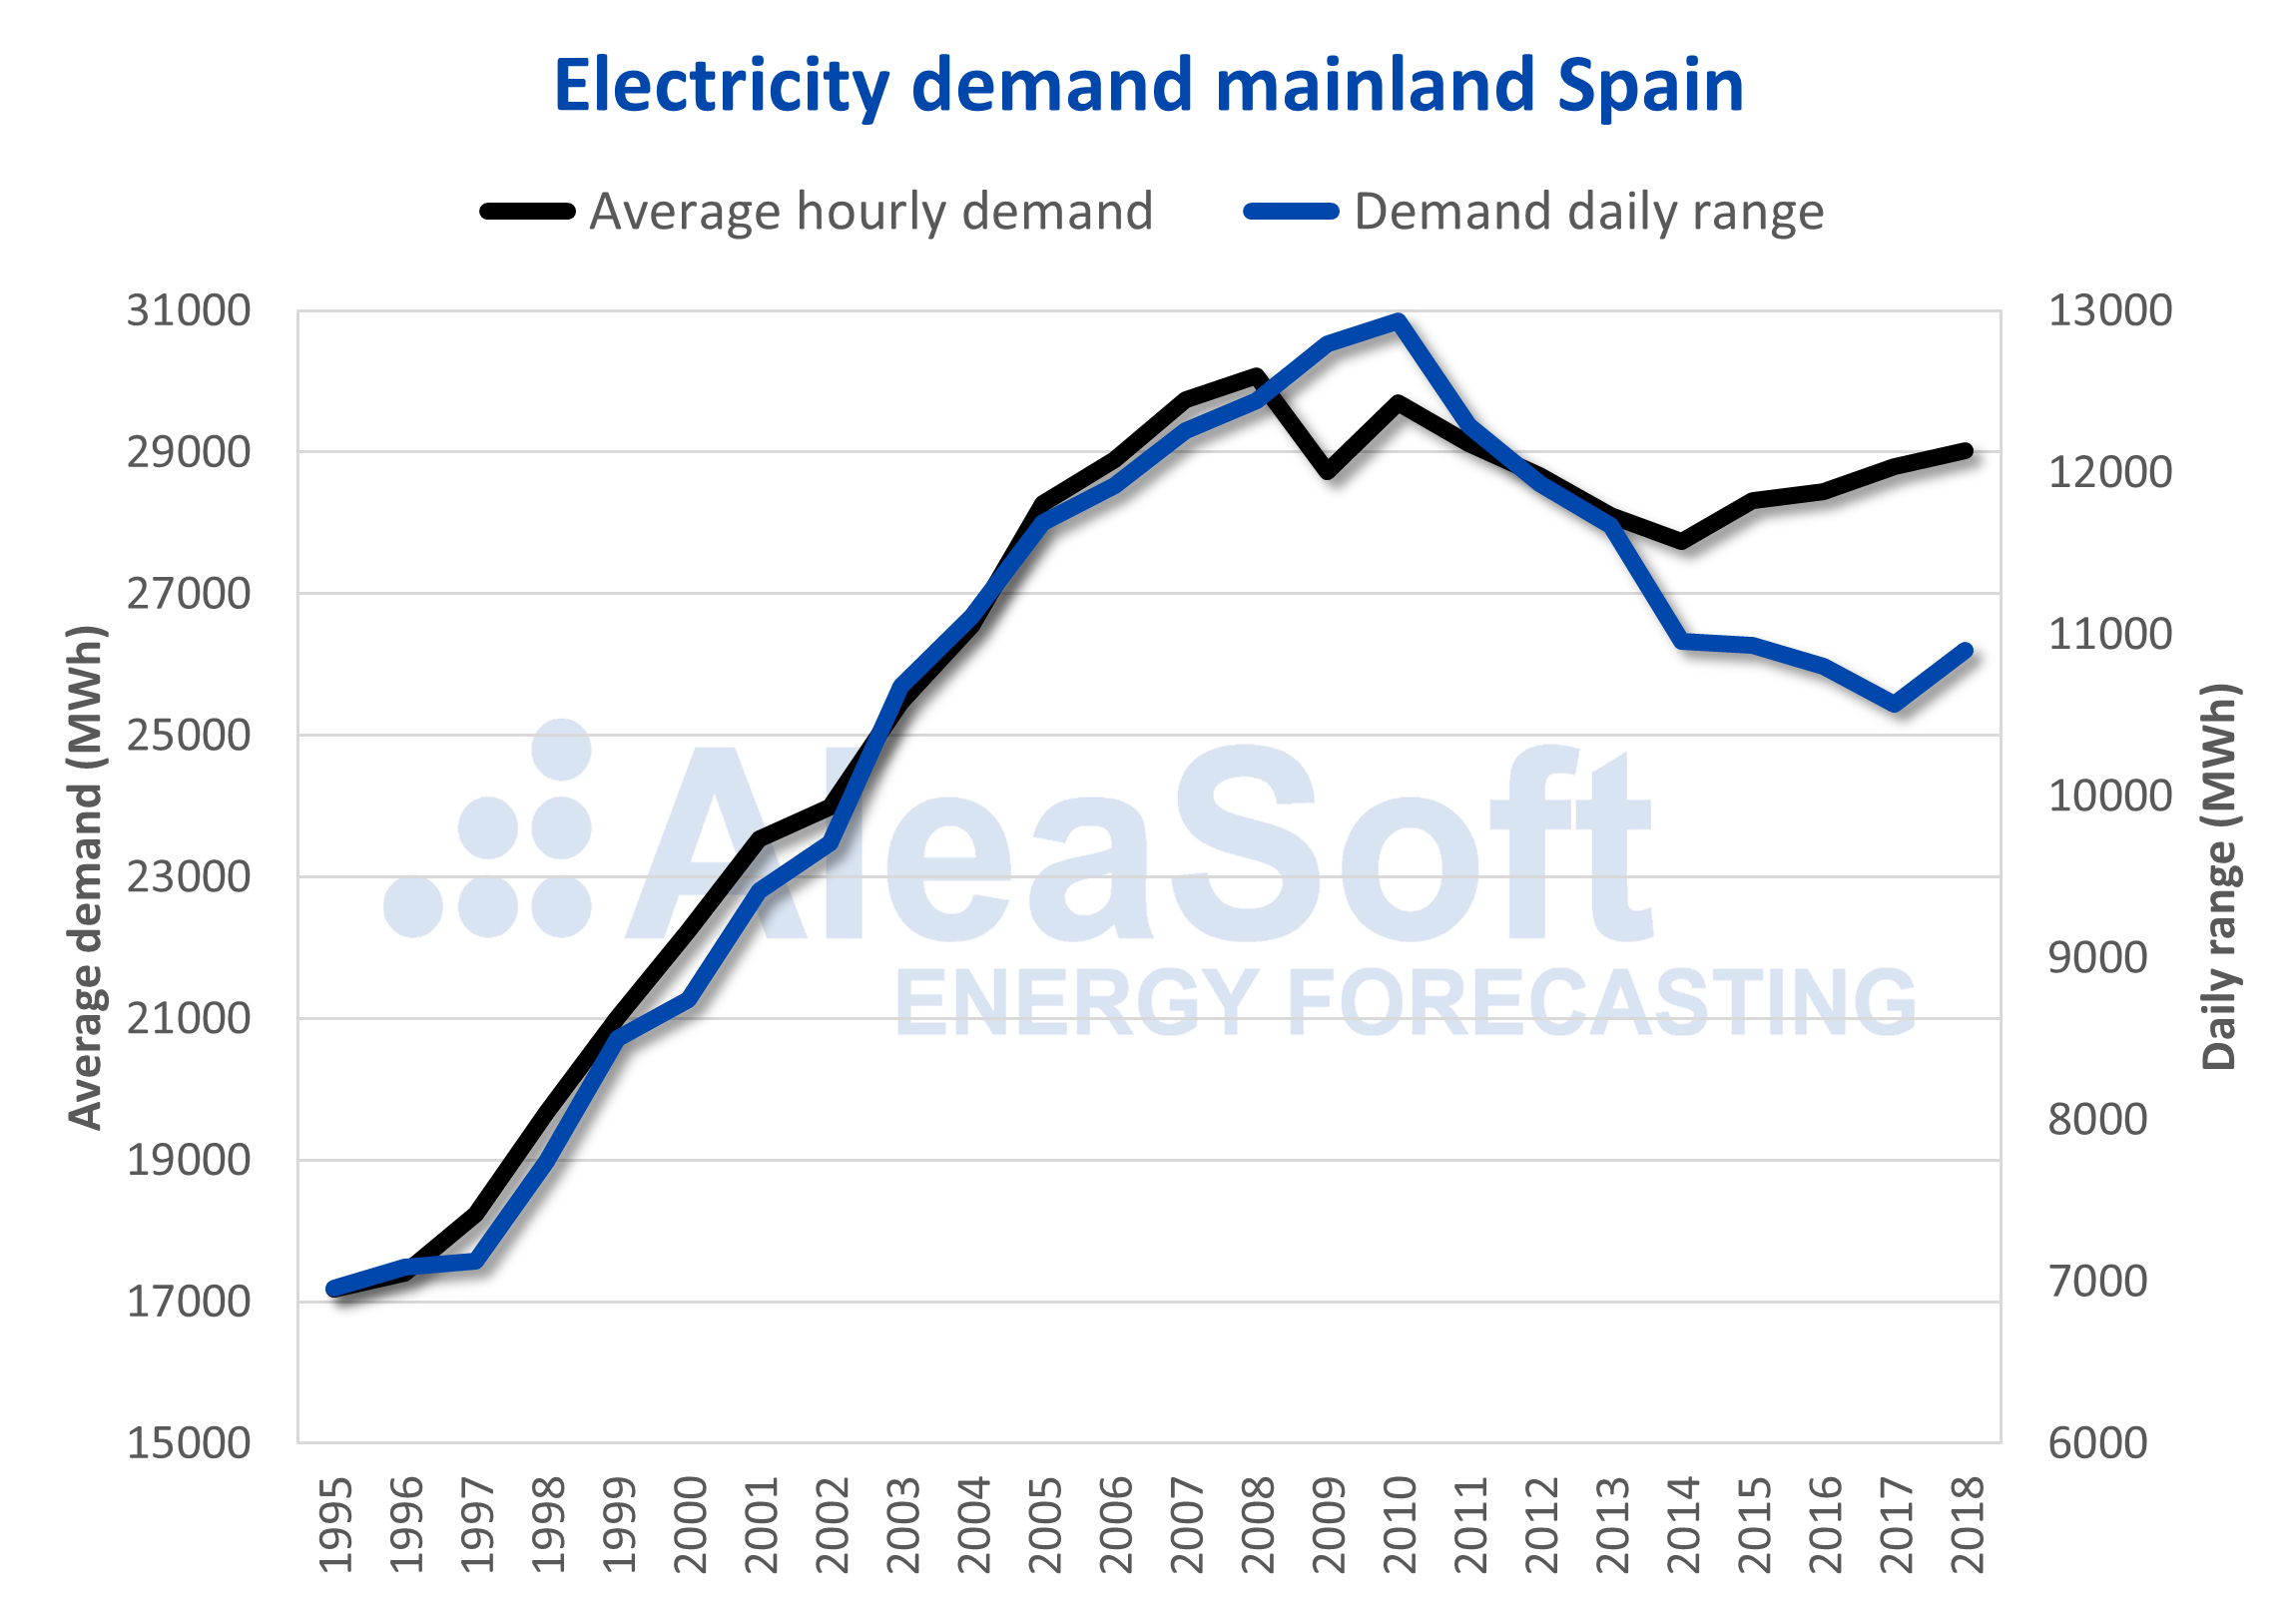 AleaSoft - Spain electricity demand